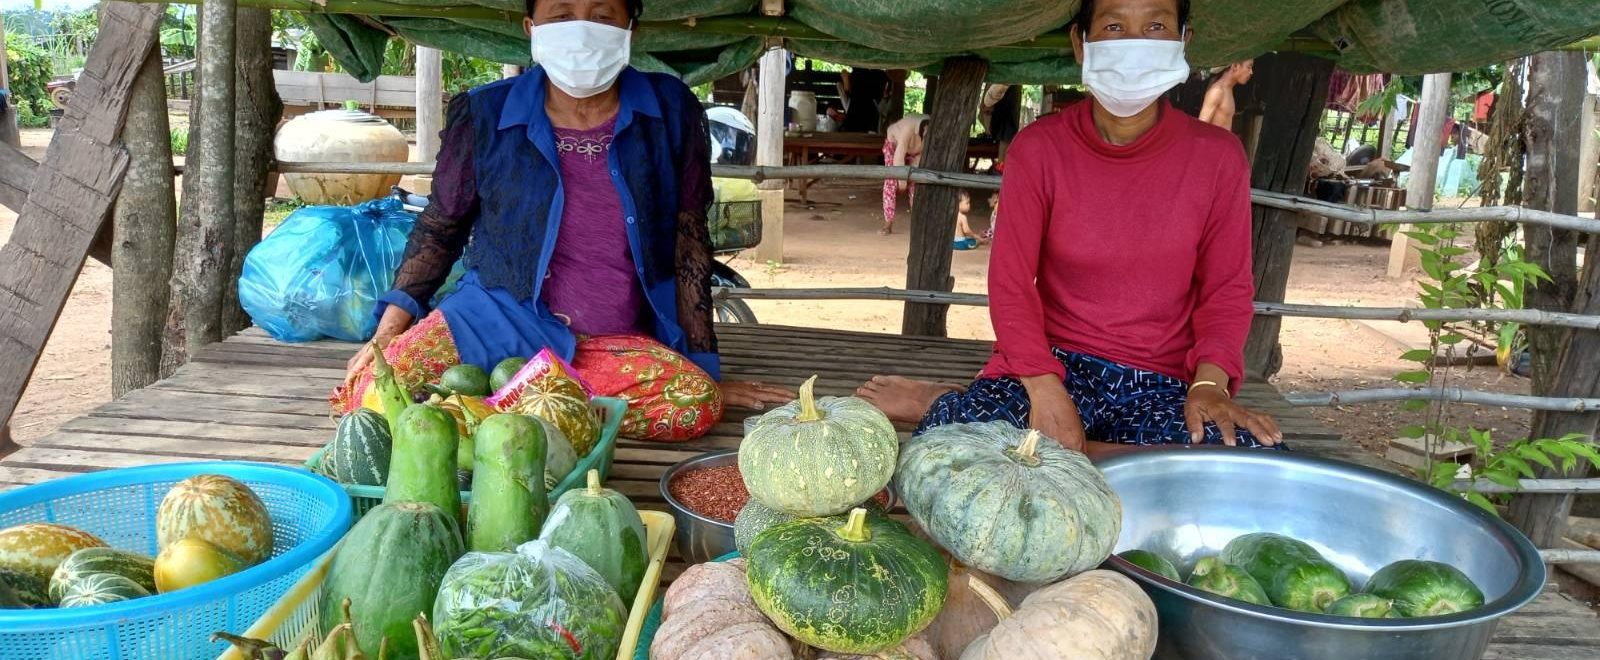 Community Sell Organic Food Amidst Pandemic